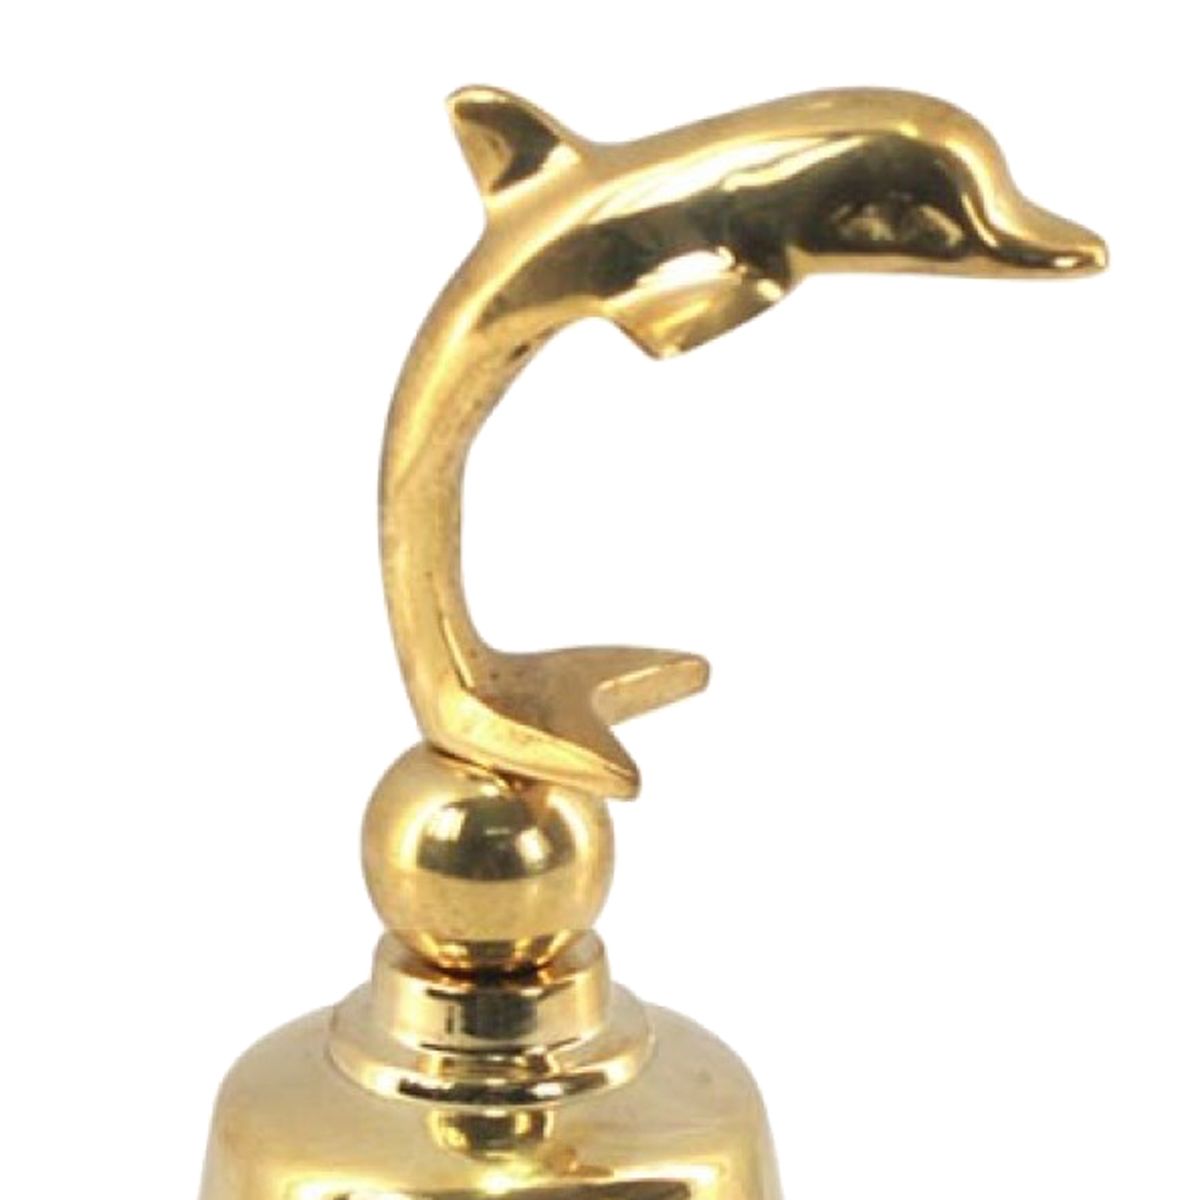 Dolphin hand bell in golden brass